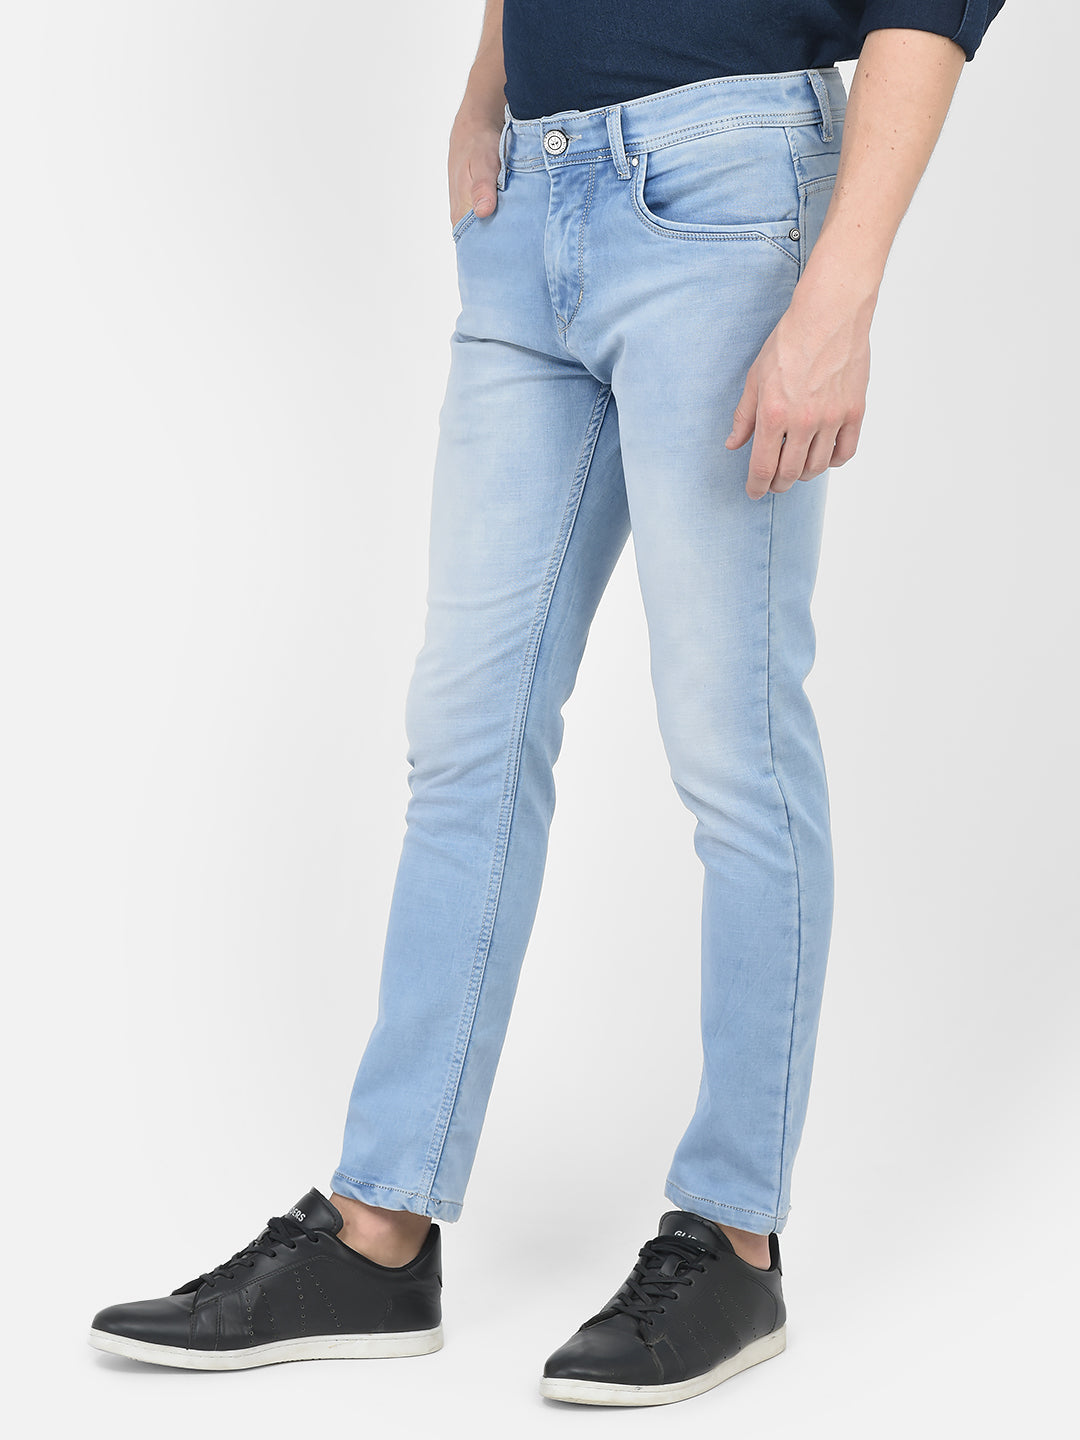  Blue Straight-Legged Jeans